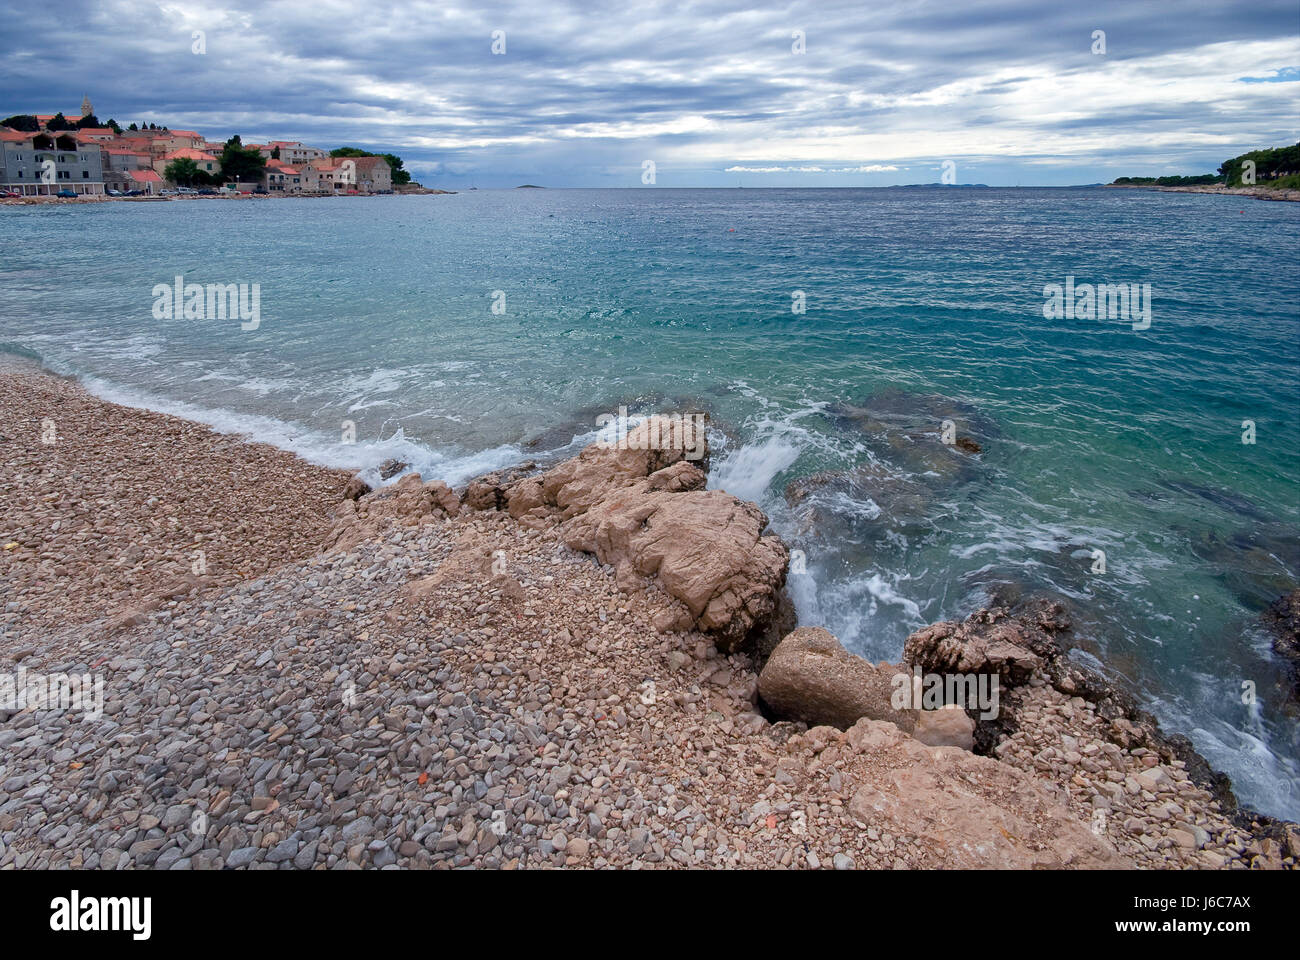 beach seaside the beach seashore adriatic sea croatia bank dalmatia isle island Stock Photo